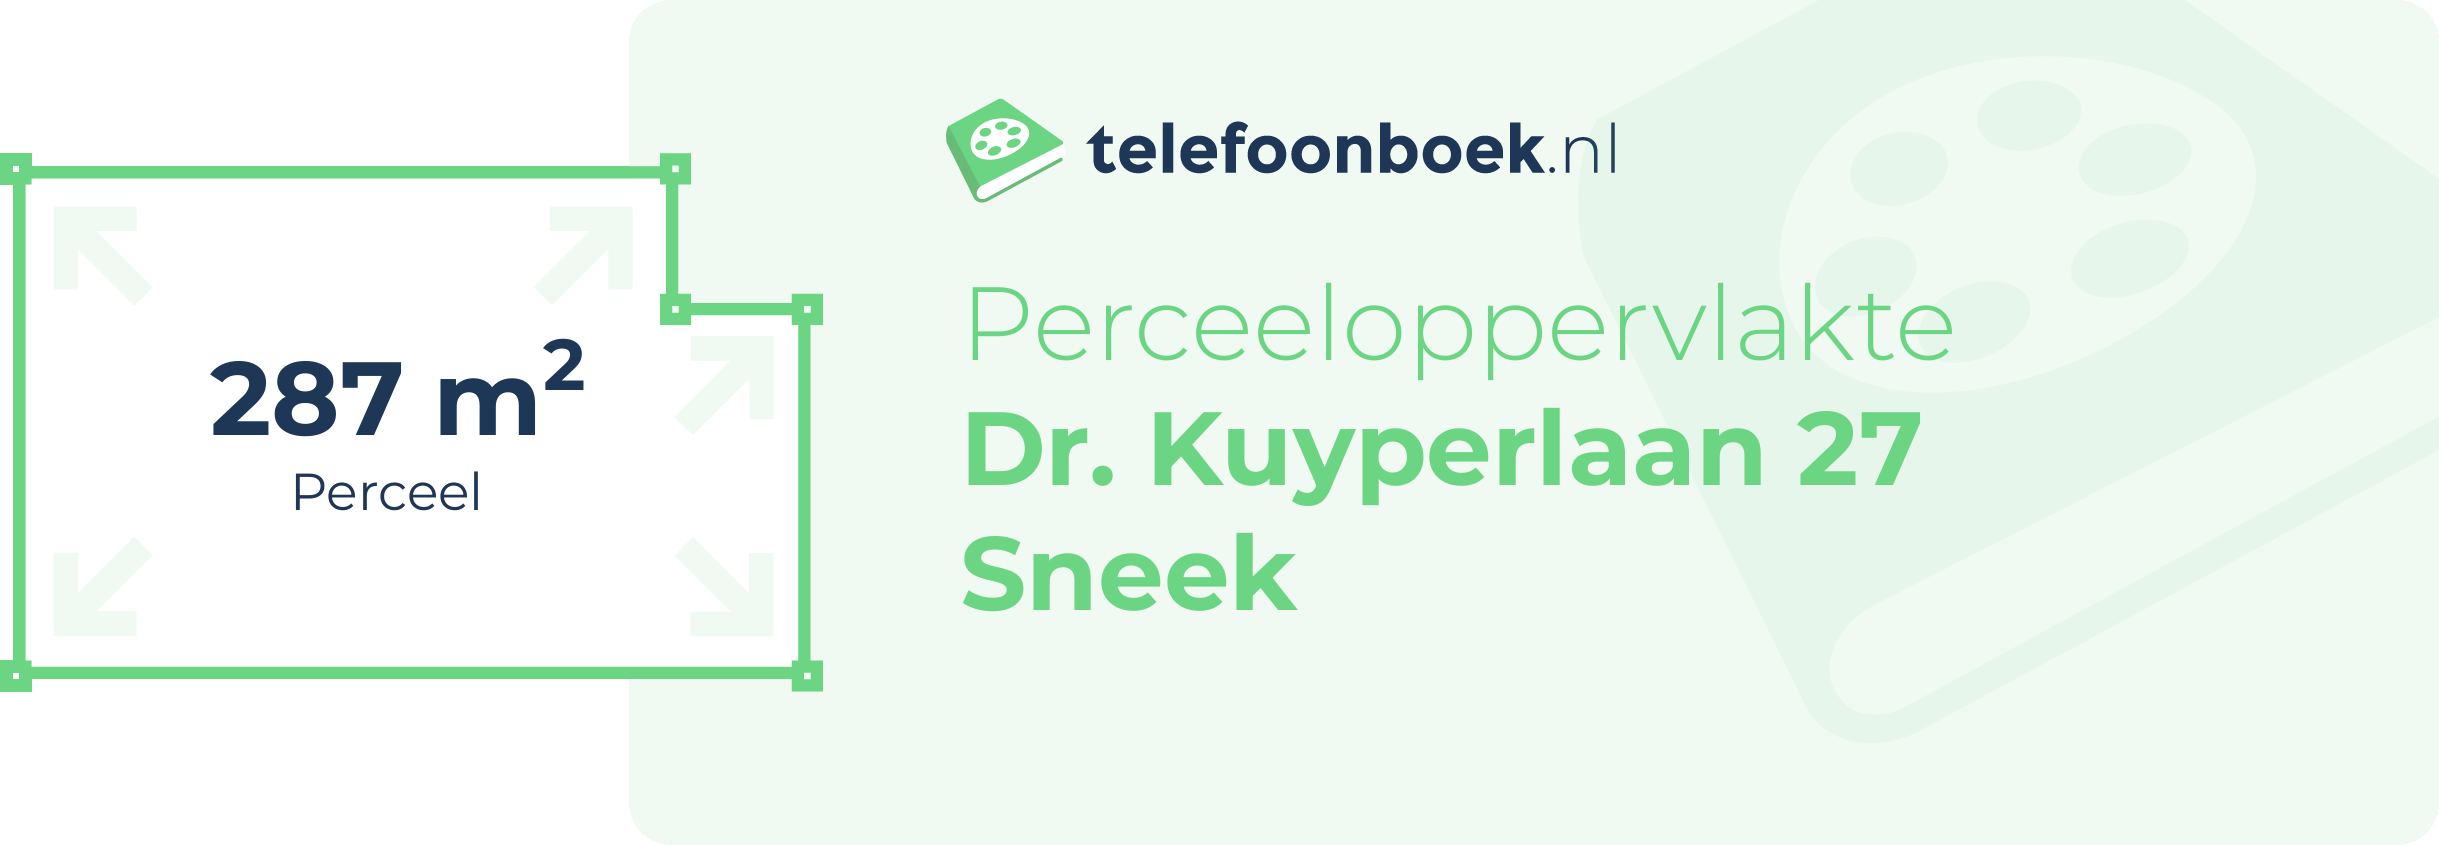 Perceeloppervlakte Dr. Kuyperlaan 27 Sneek